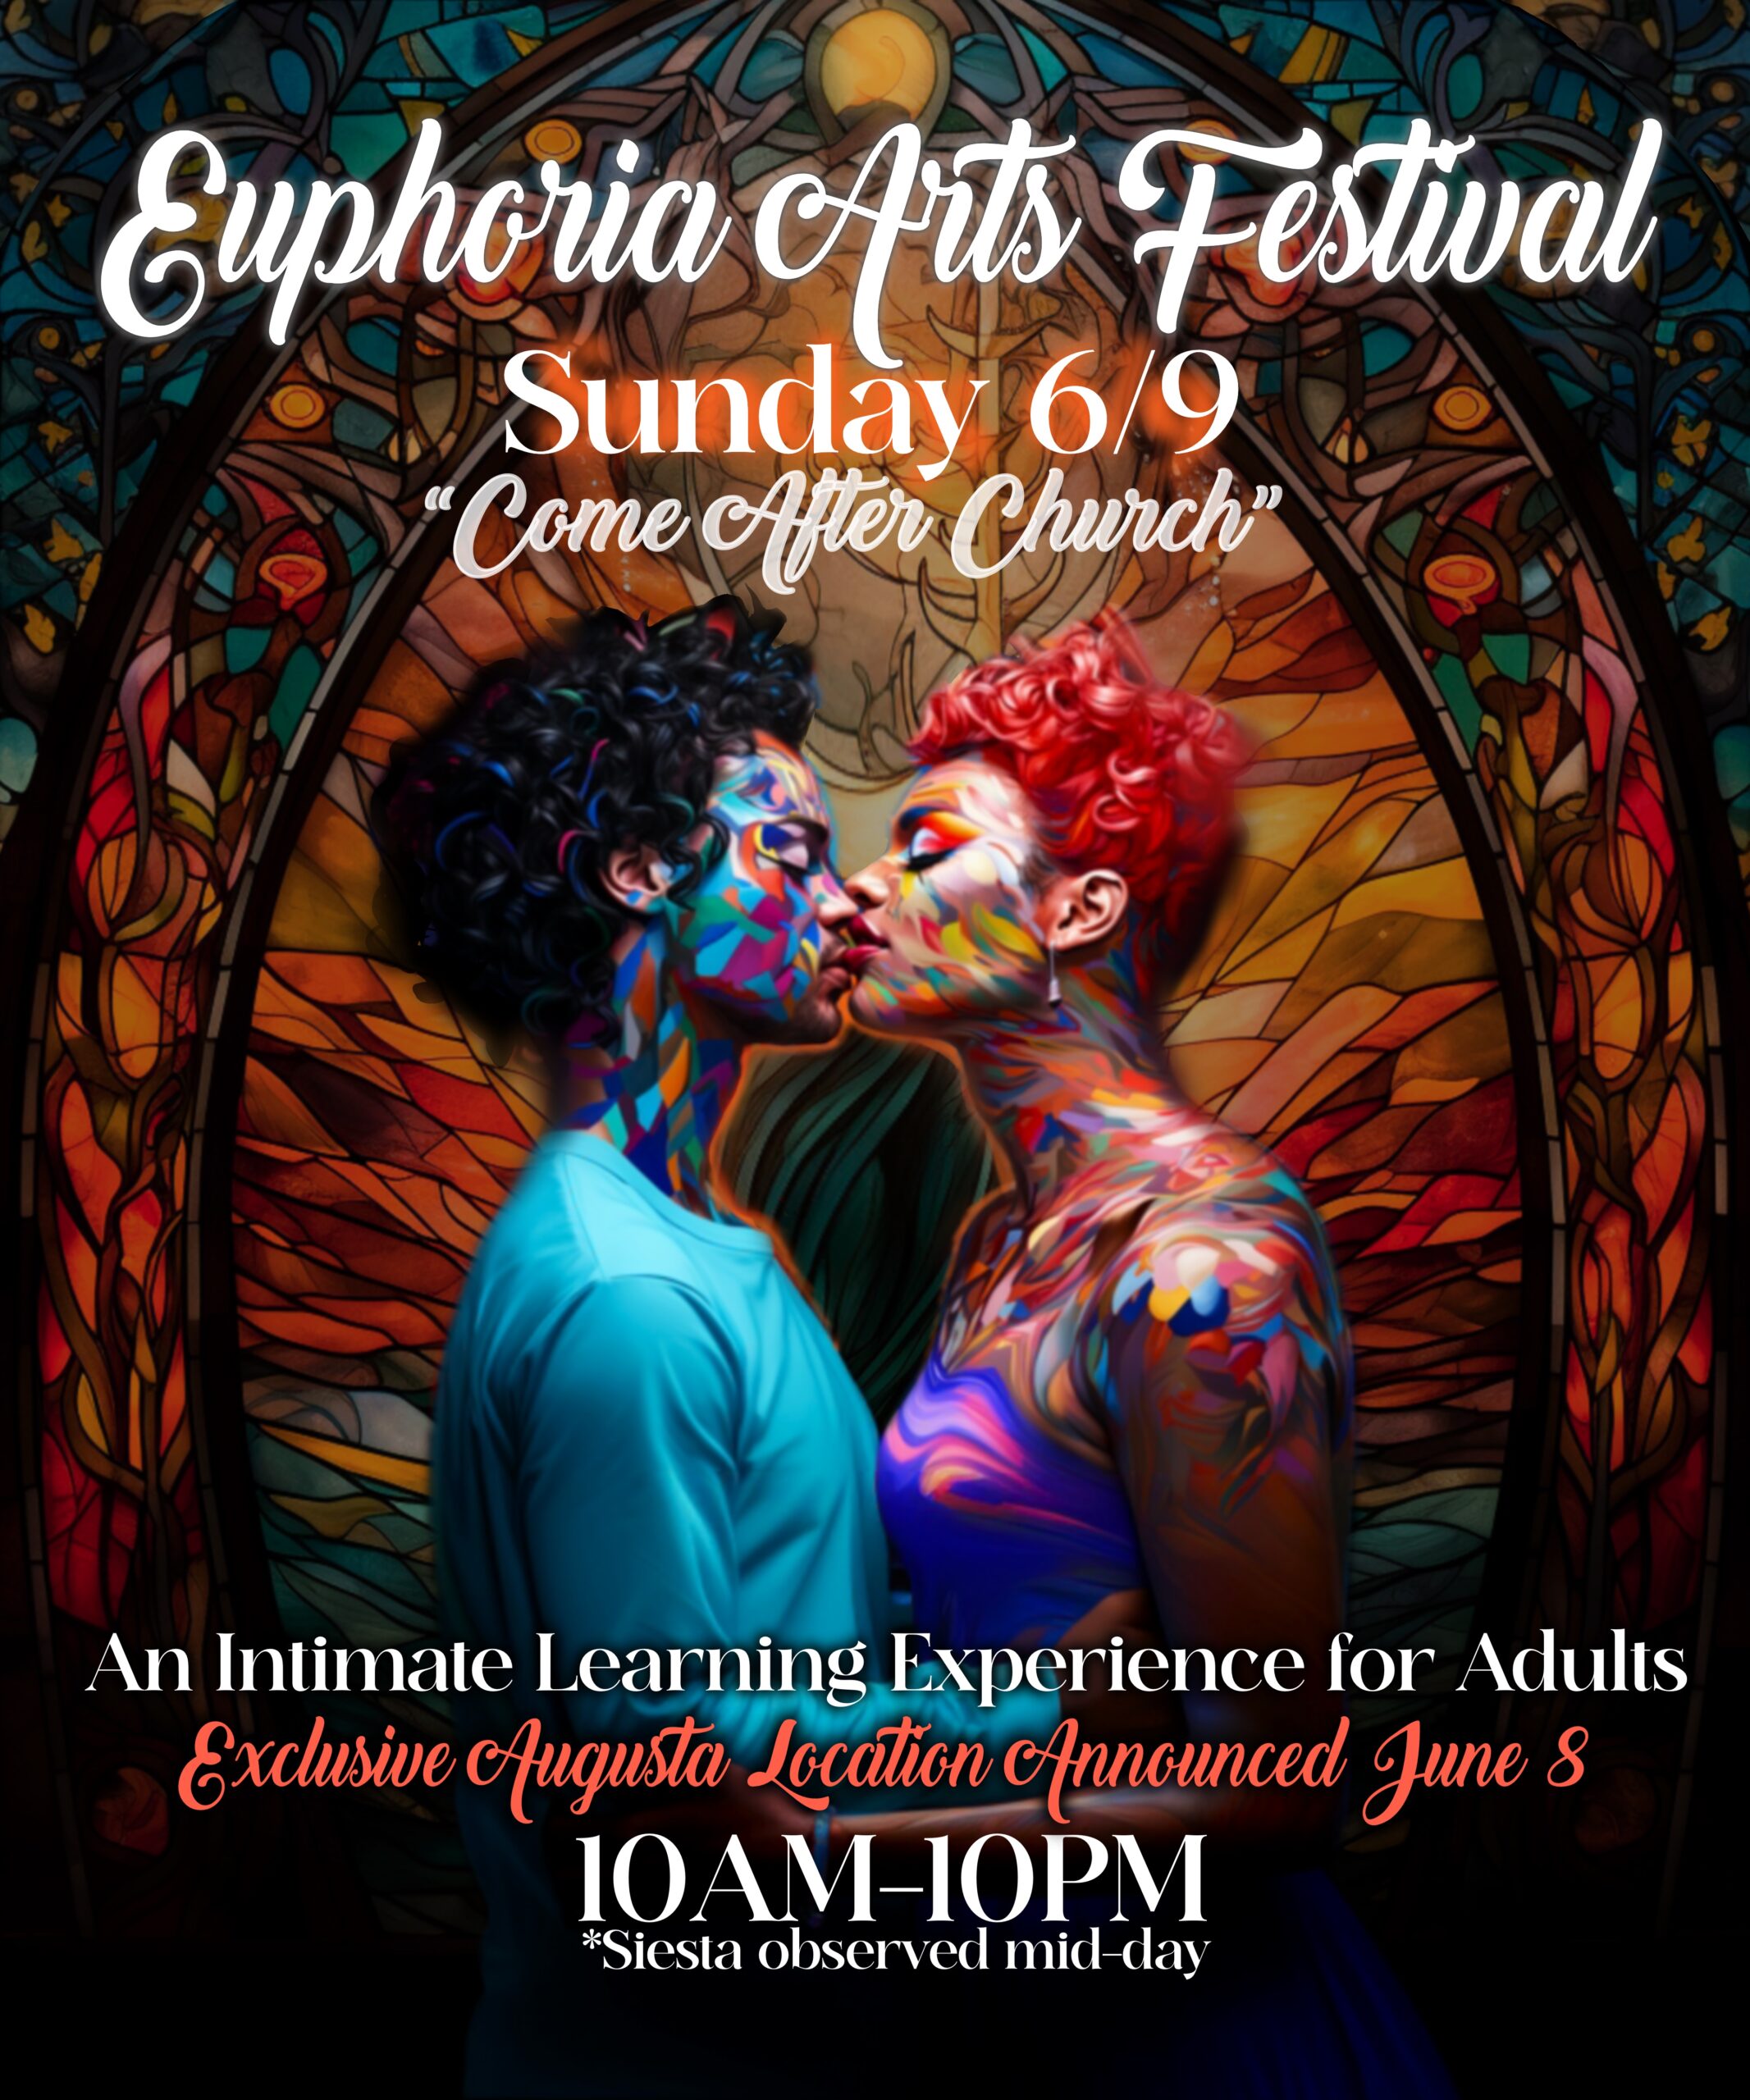 flyer for euphoria arts festival.